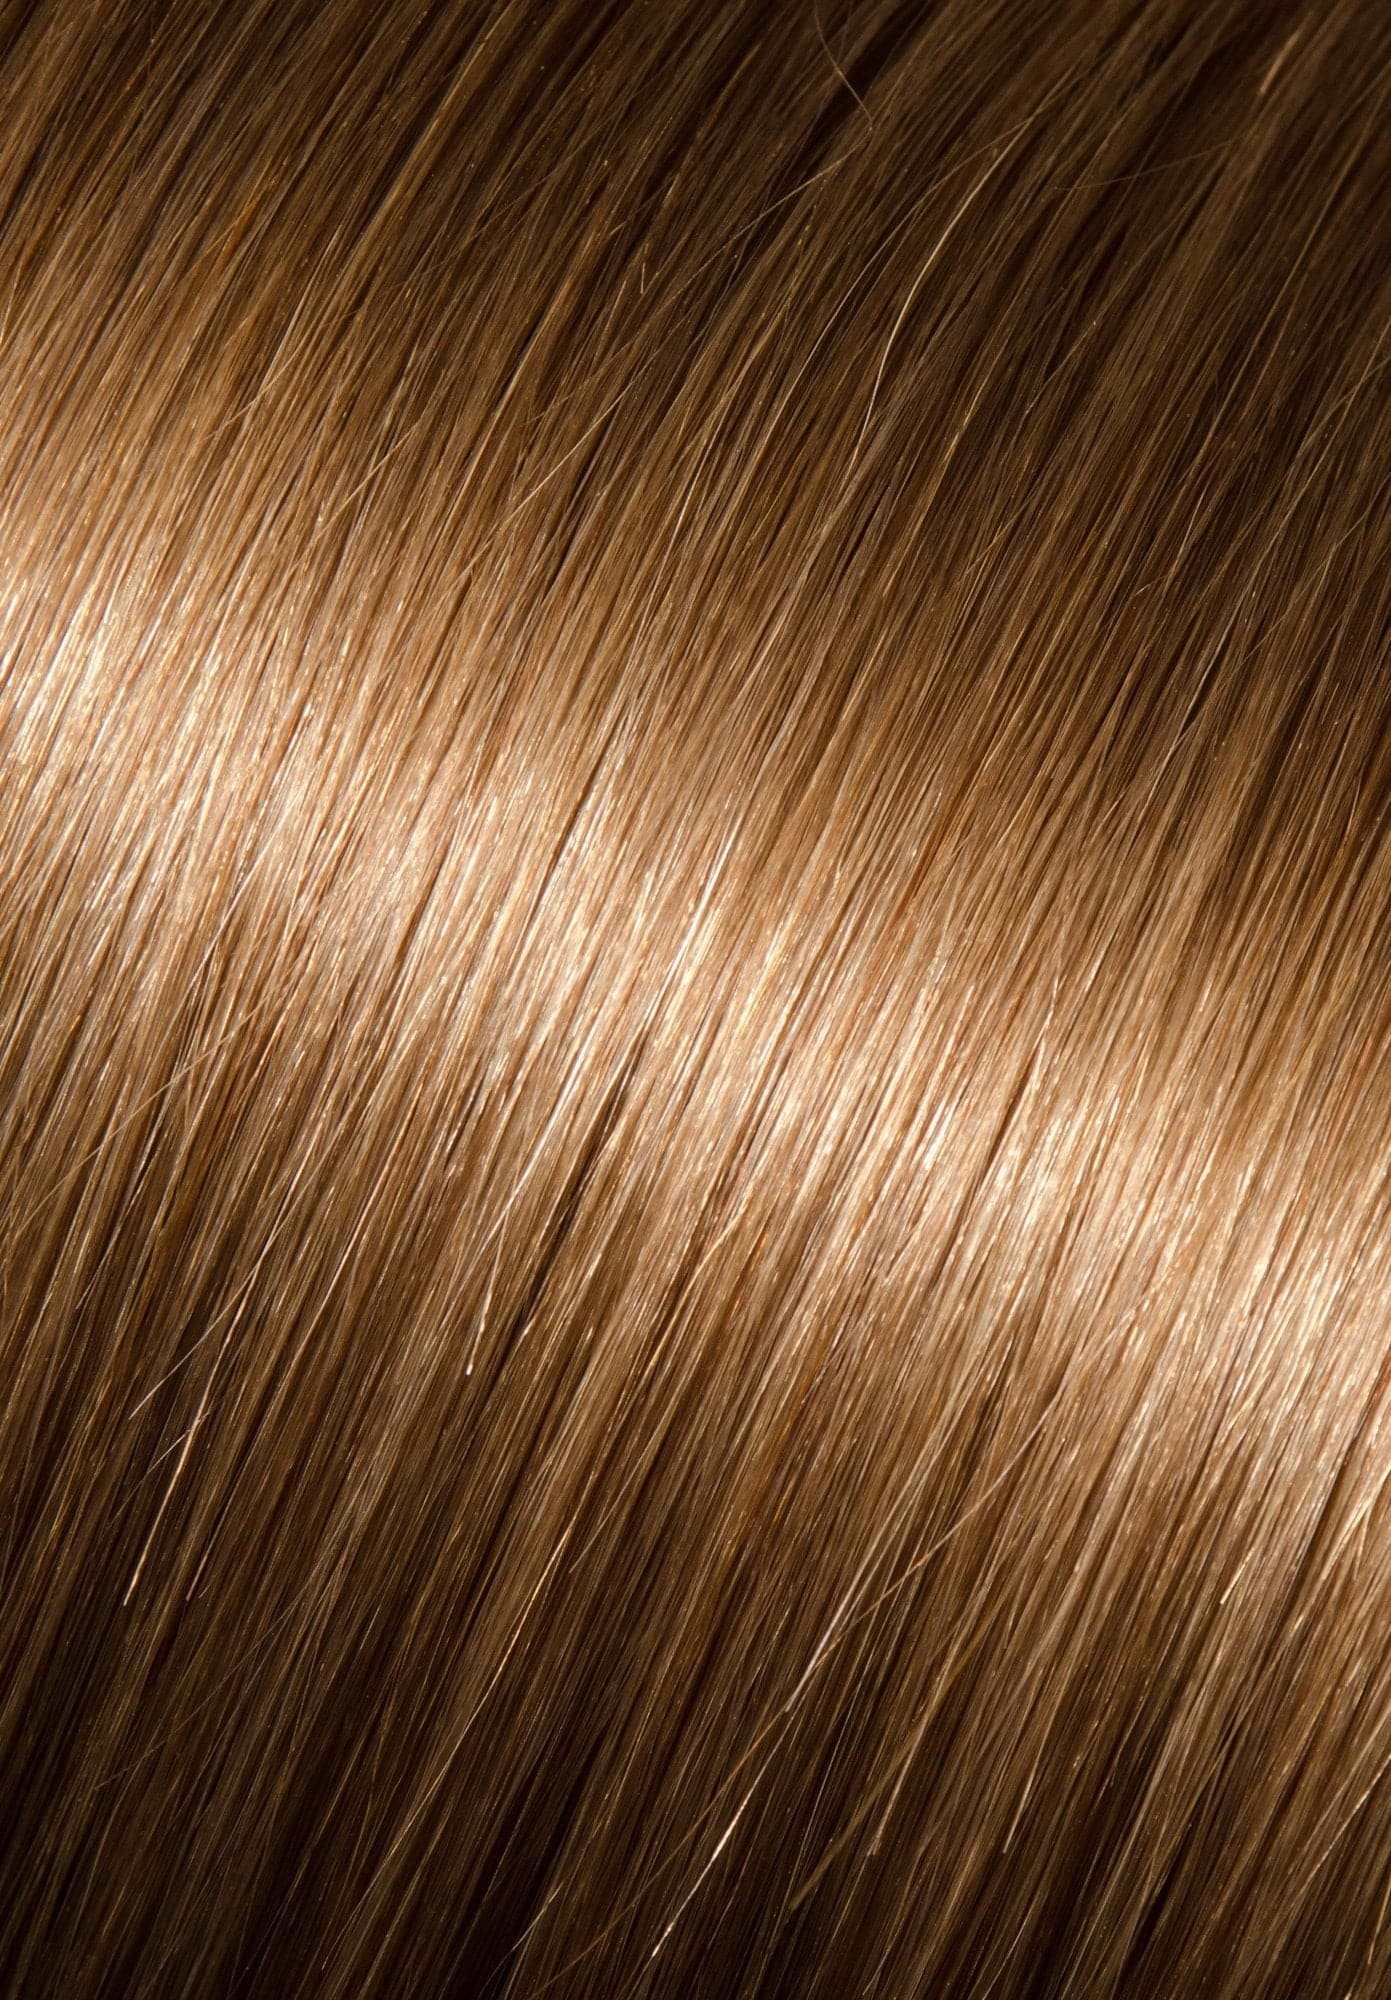 16" Flat-Tip Pro Straight #8 (Light Chestnut Brown) - Donna Bella Hair